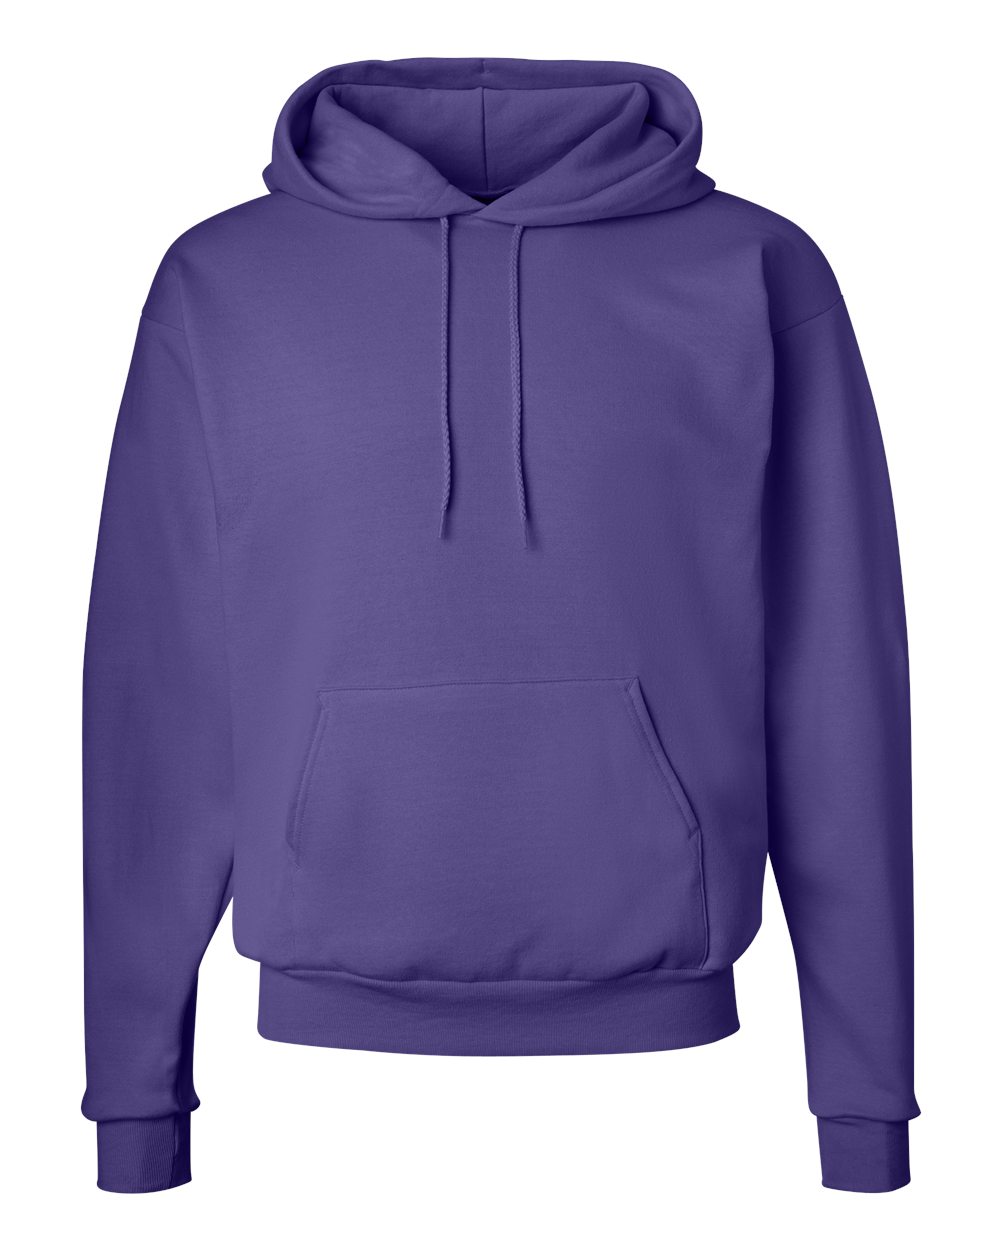 Hanes Mens Blank Ecosmart Hooded Sweatshirt P170 up to 5XL | eBay